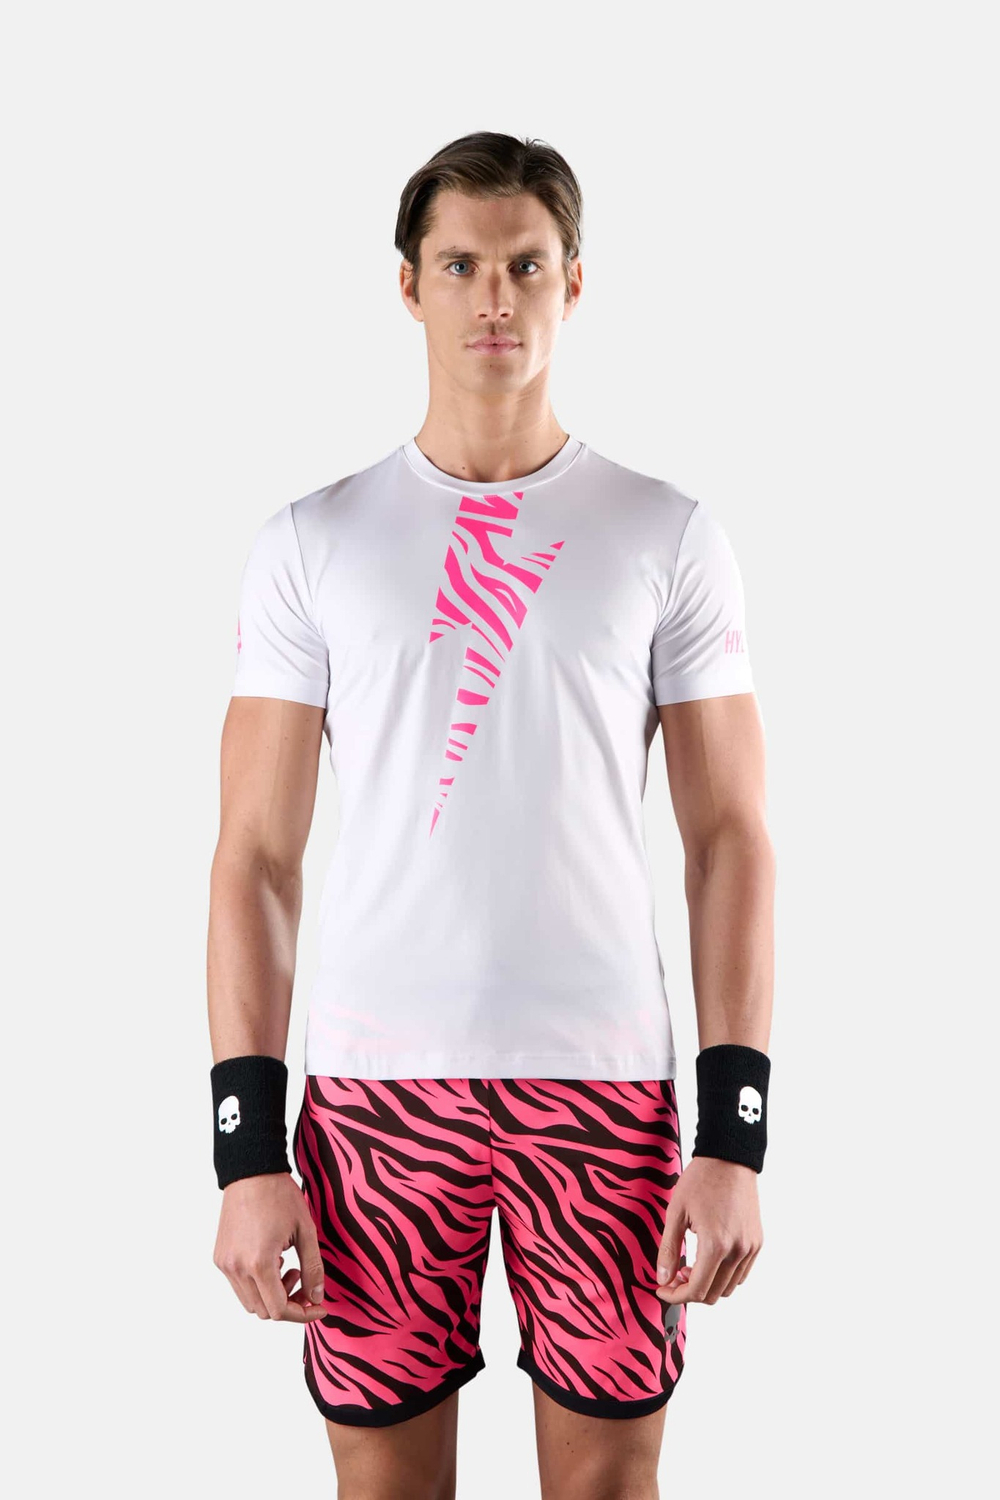 Мужская теннисная футболка  HYDROGEN TIGER TECH (T00700-D60)